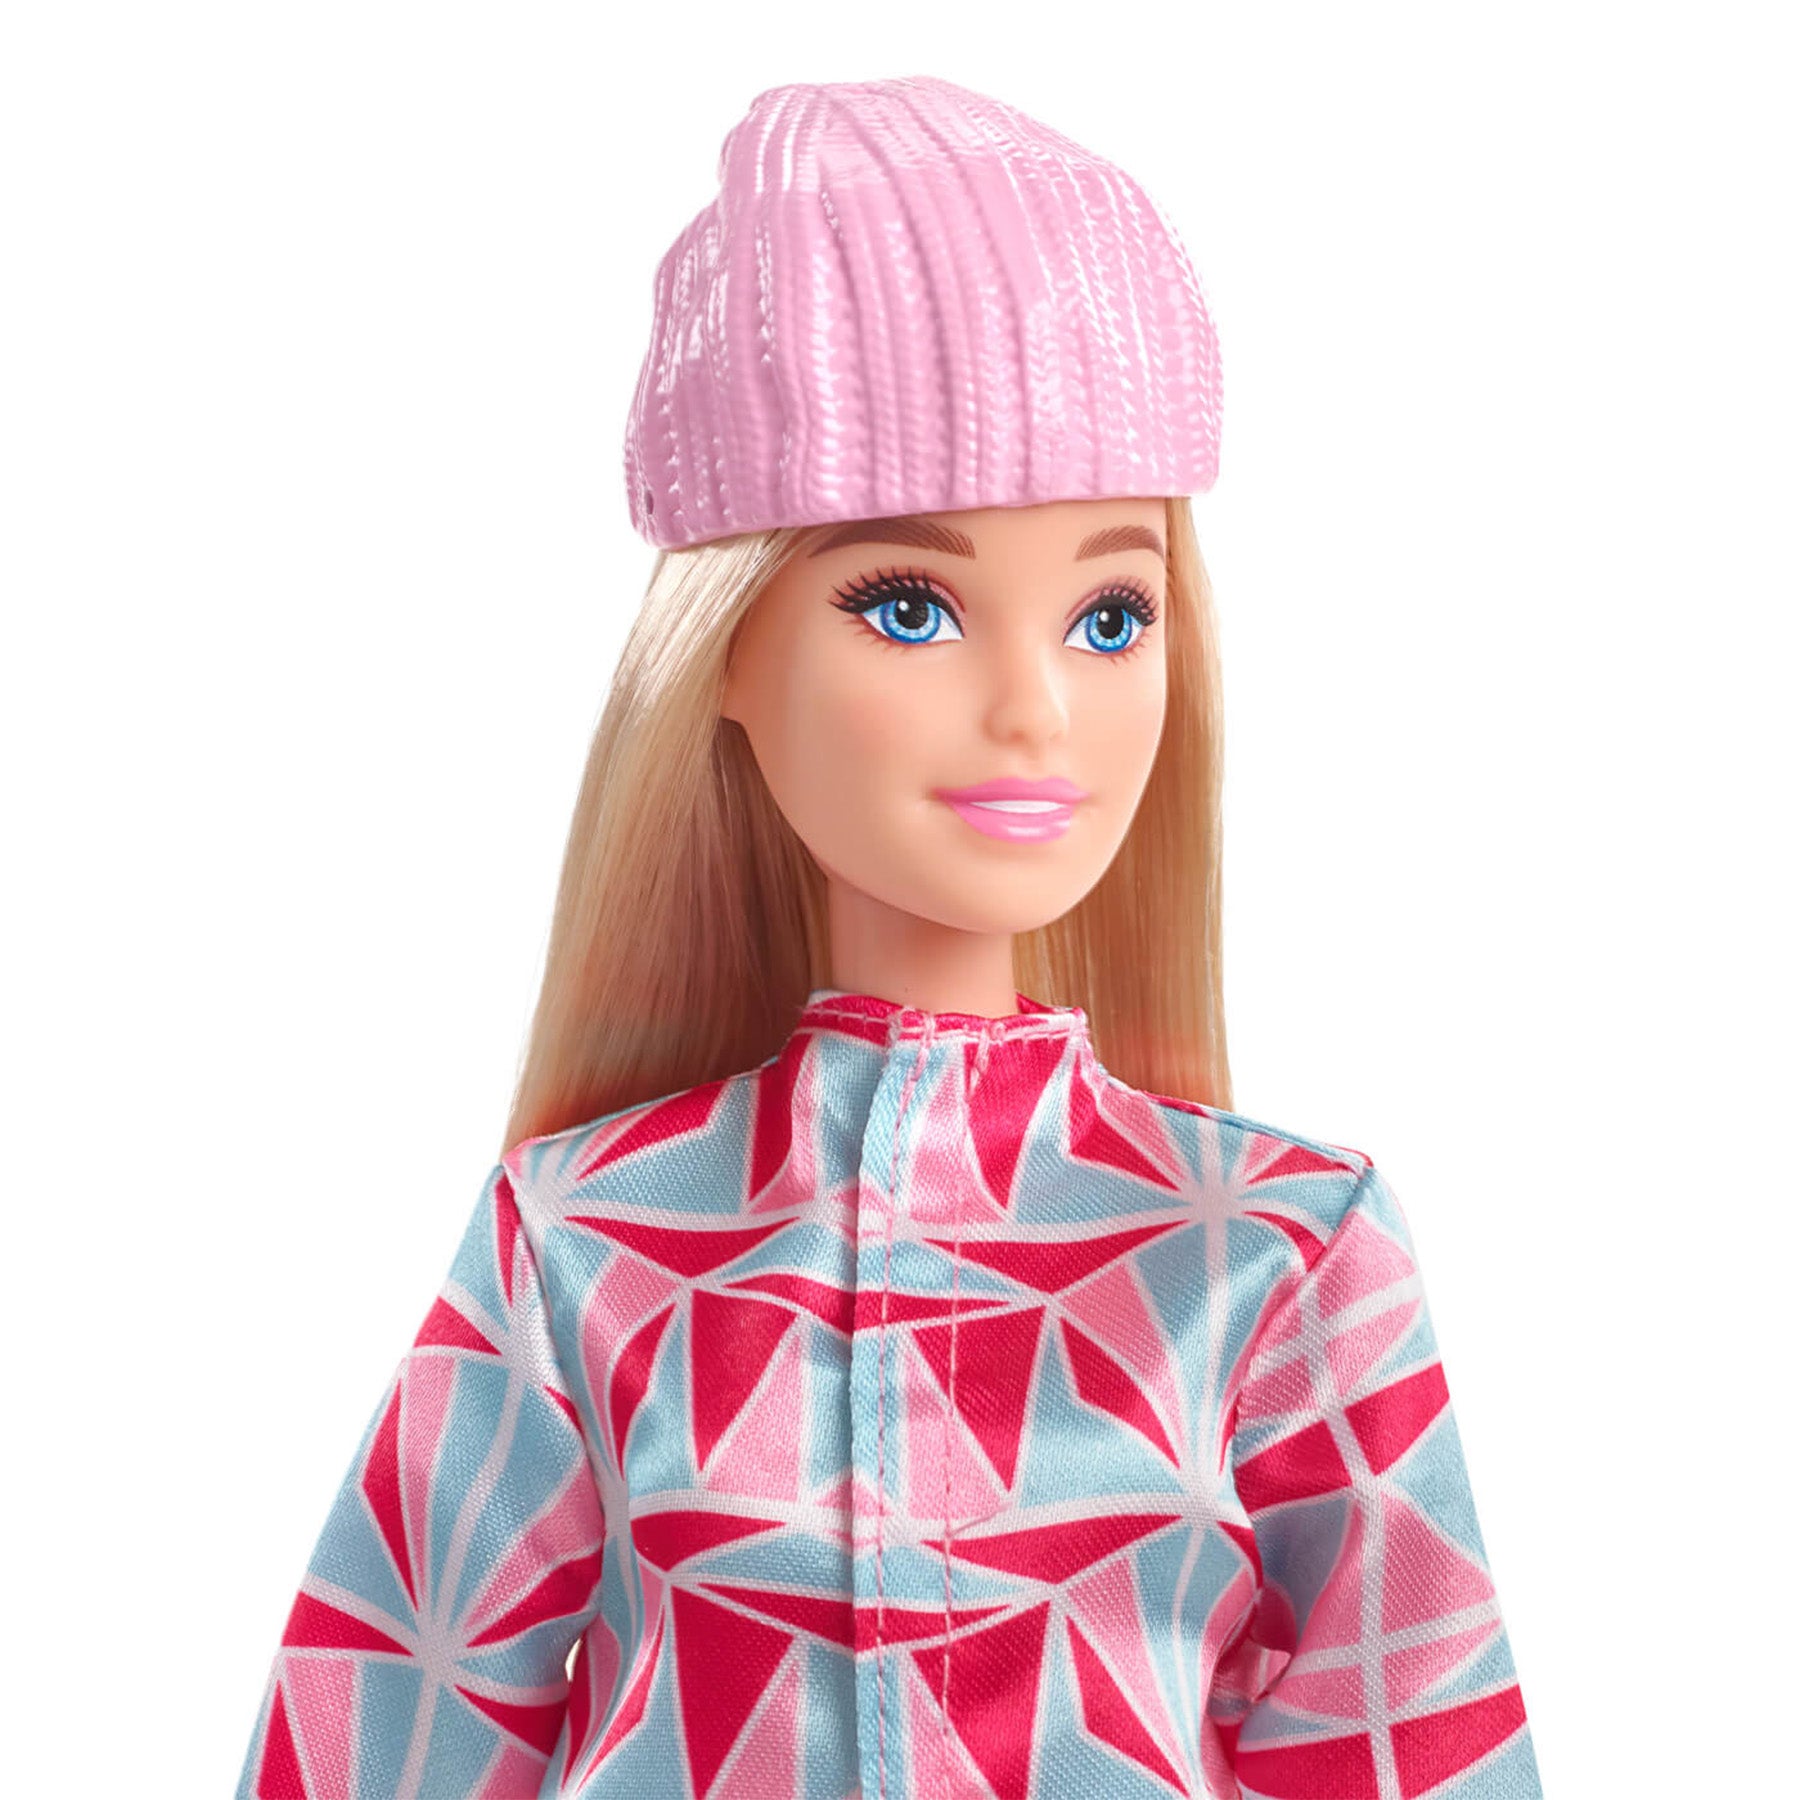 Barbie Doll - Snowboarder